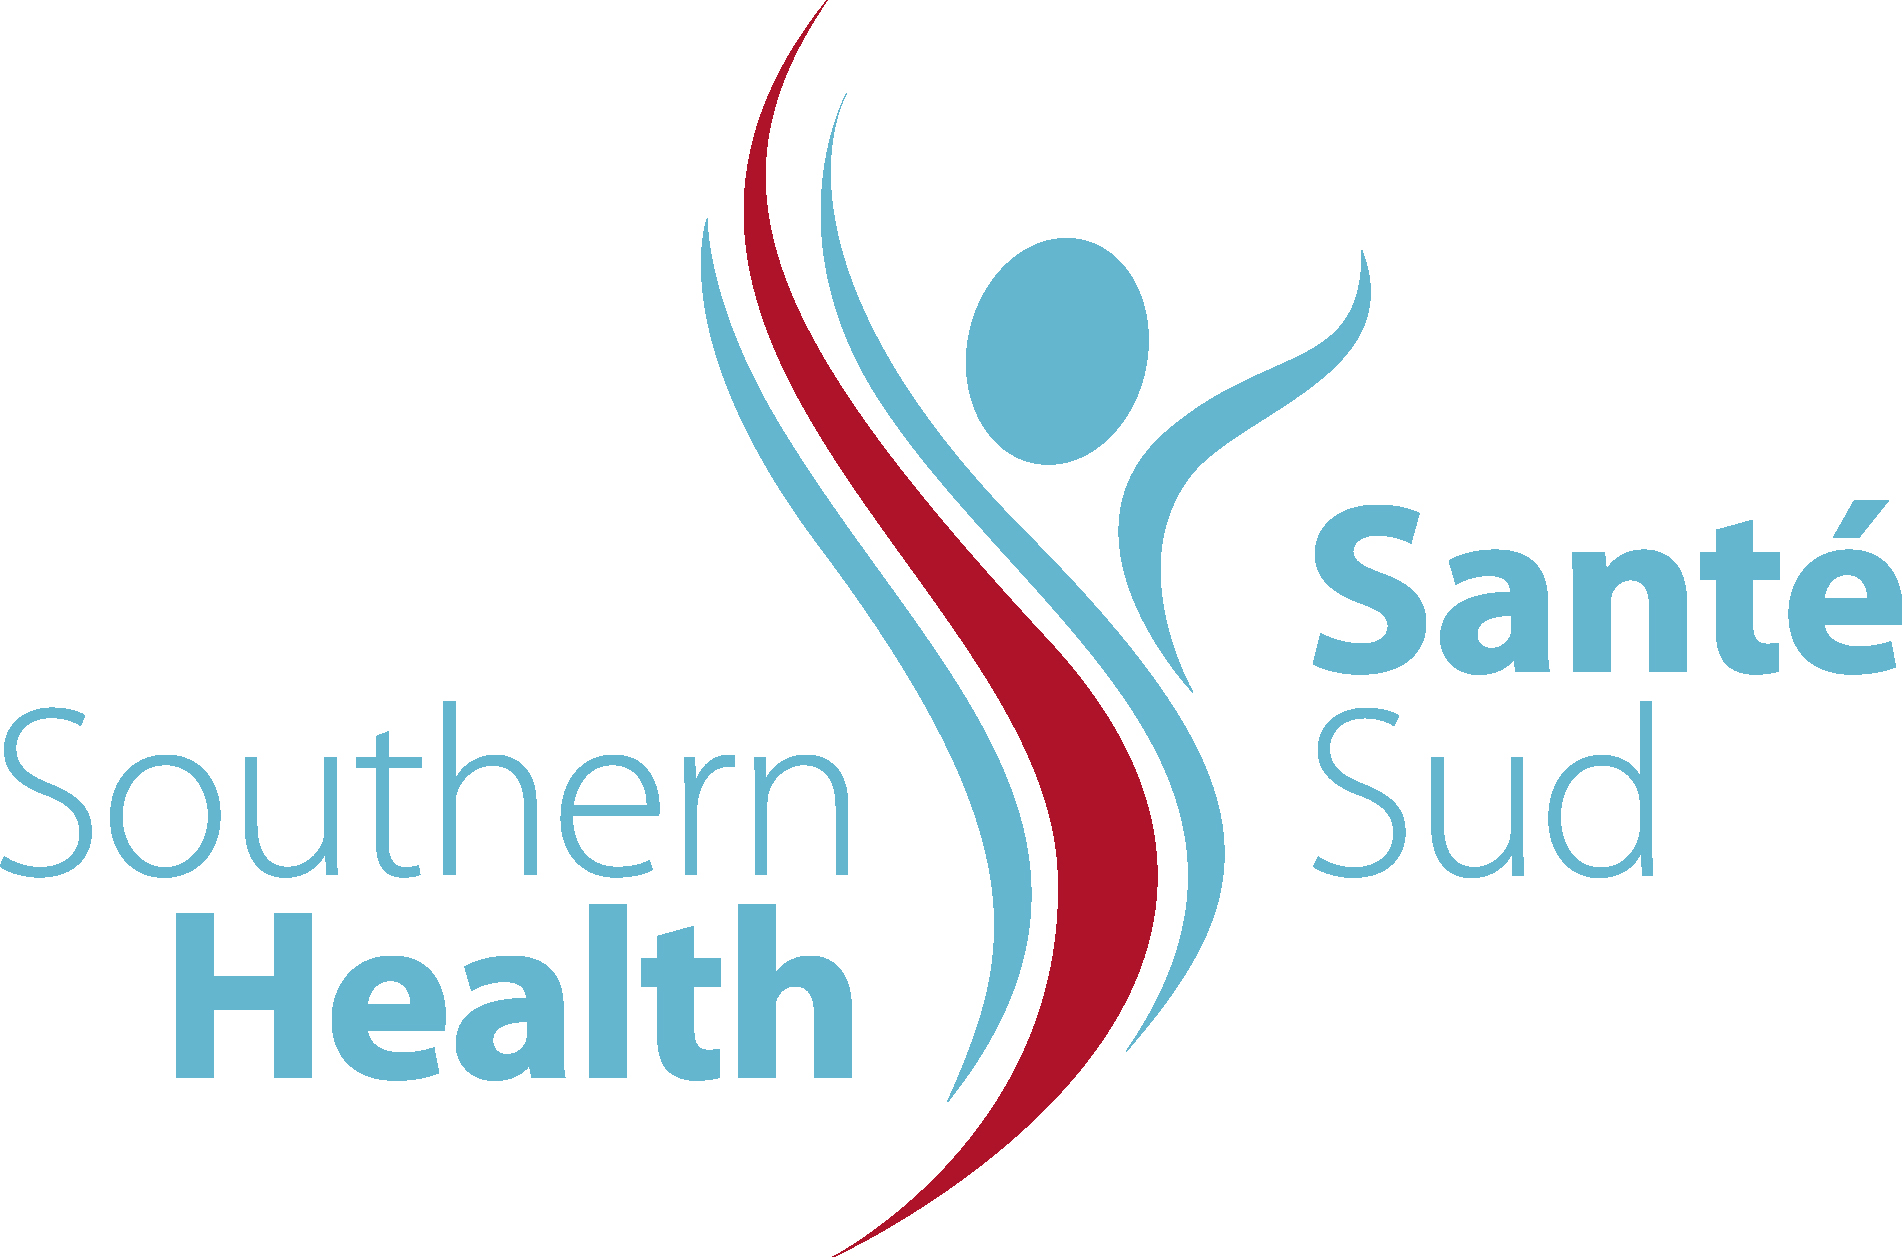 Southern Health Logo